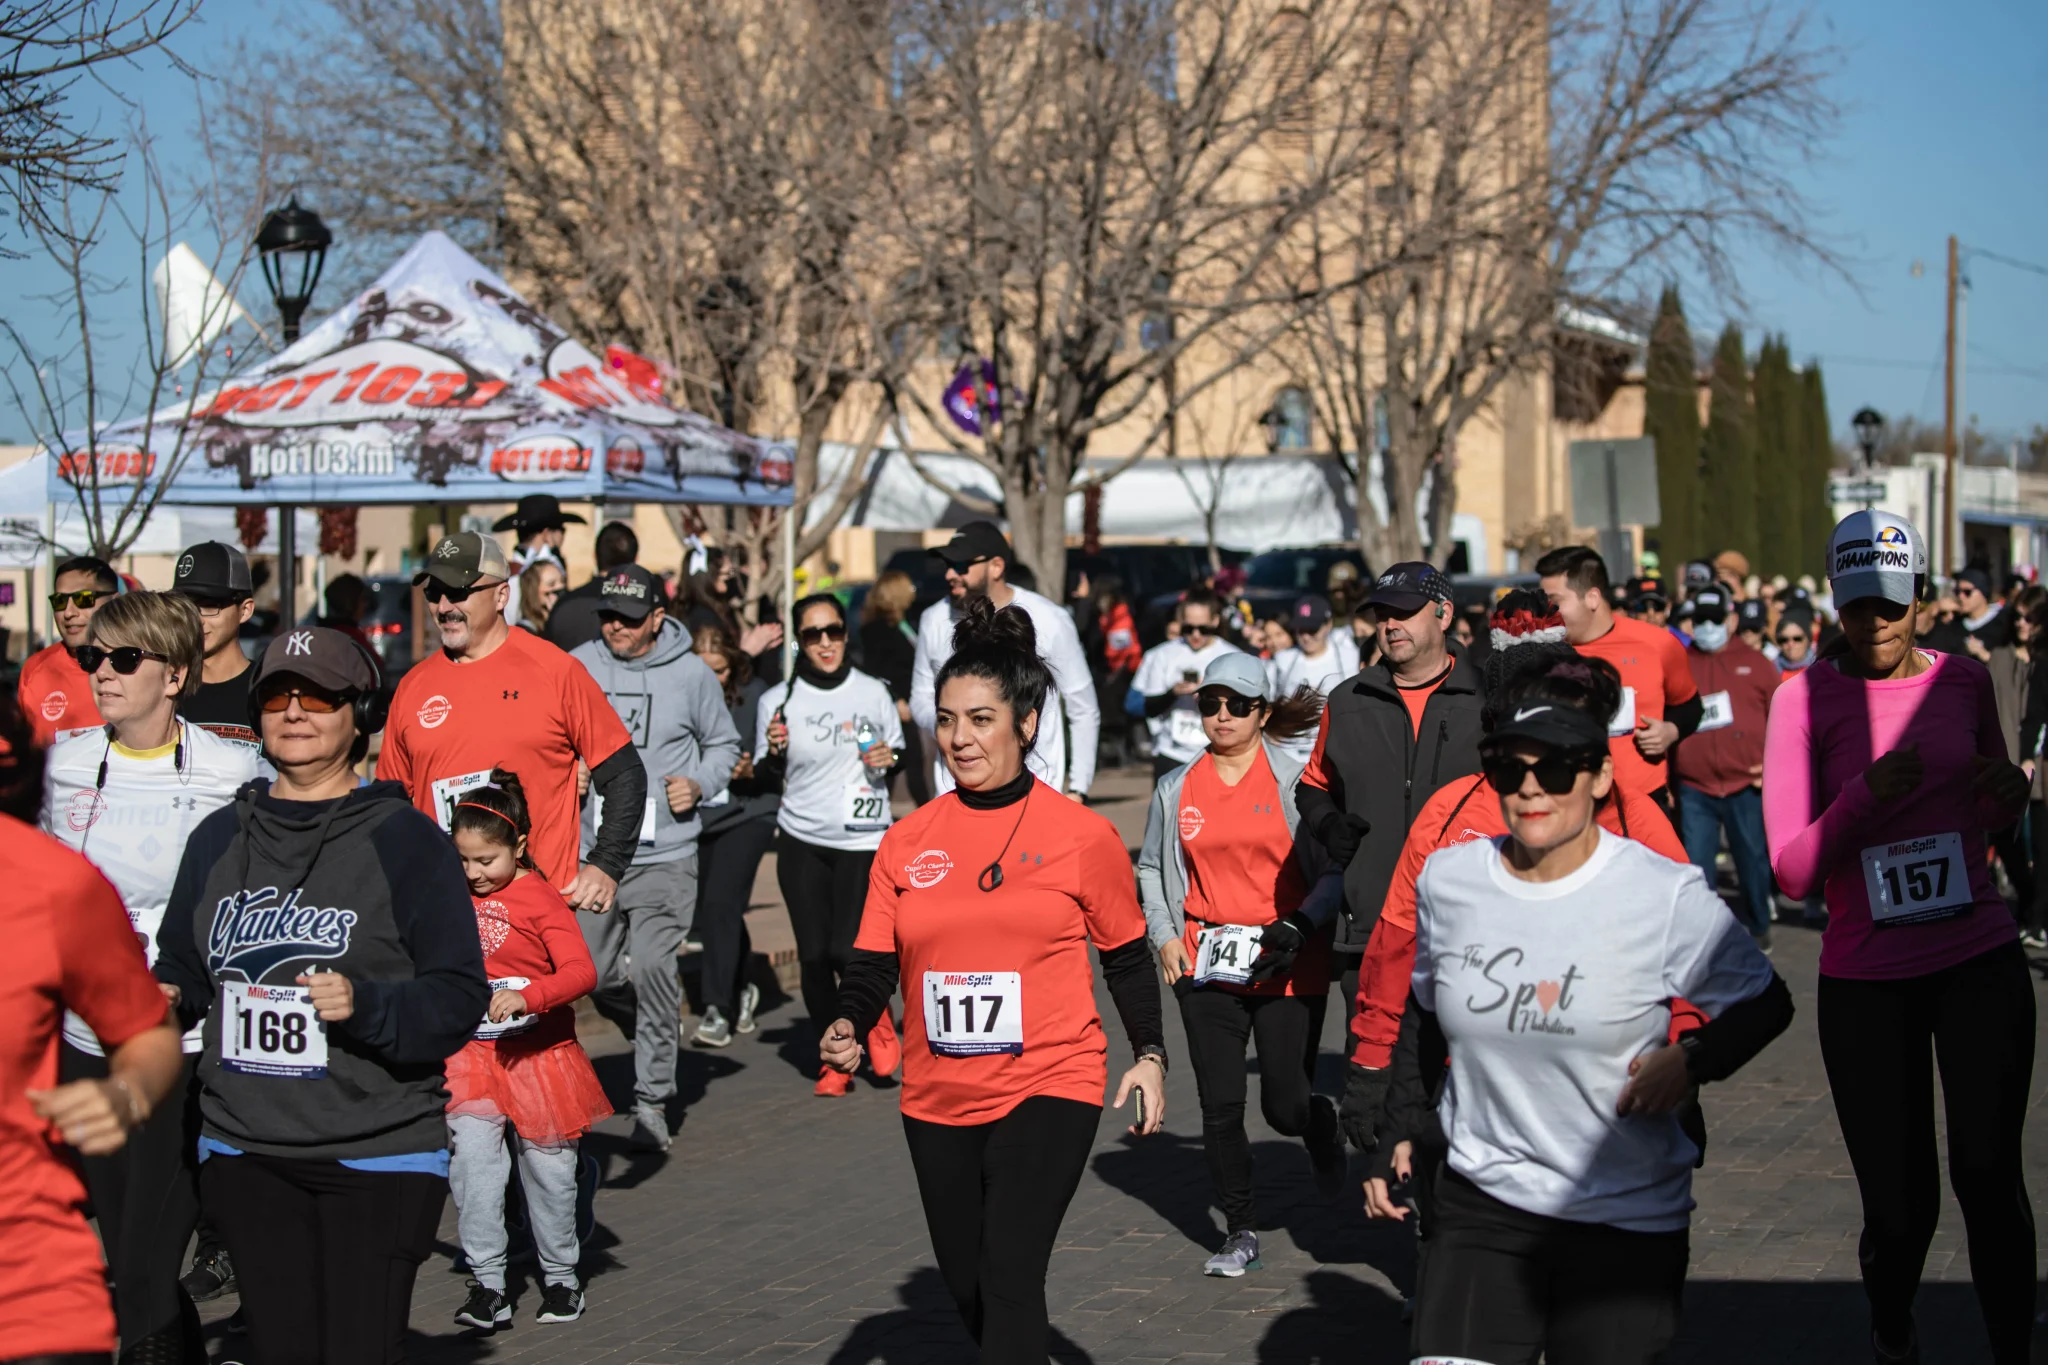 Runners start the Cupid's Chase 5K in Mesilla on Saturday, Feb. 12, 2022. Nathan J Fish/Sun-News - lcsun-news.com